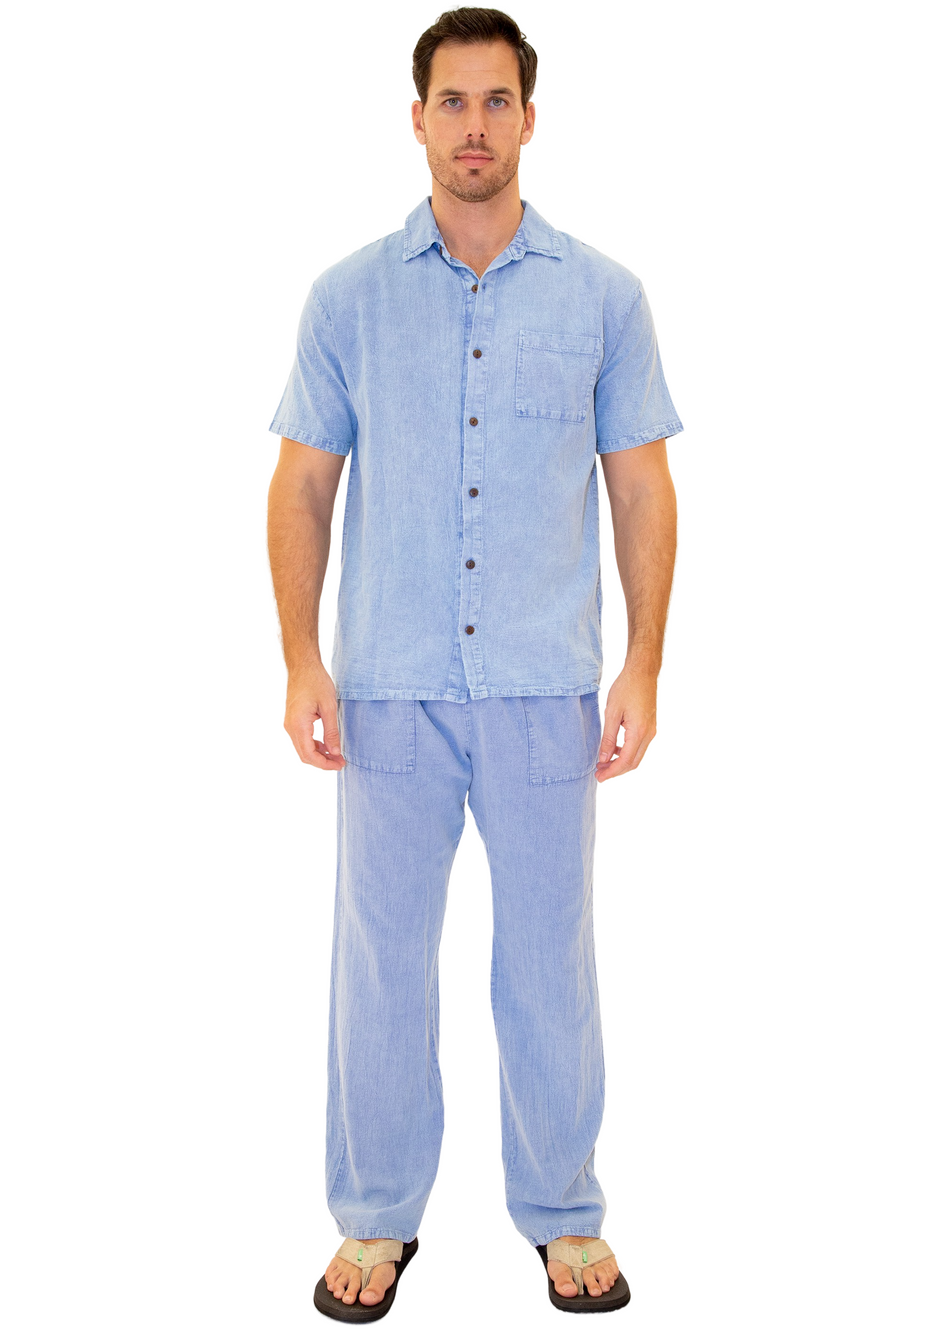 GZ1007 - Blue Cotton Button Down Pocket Shirt